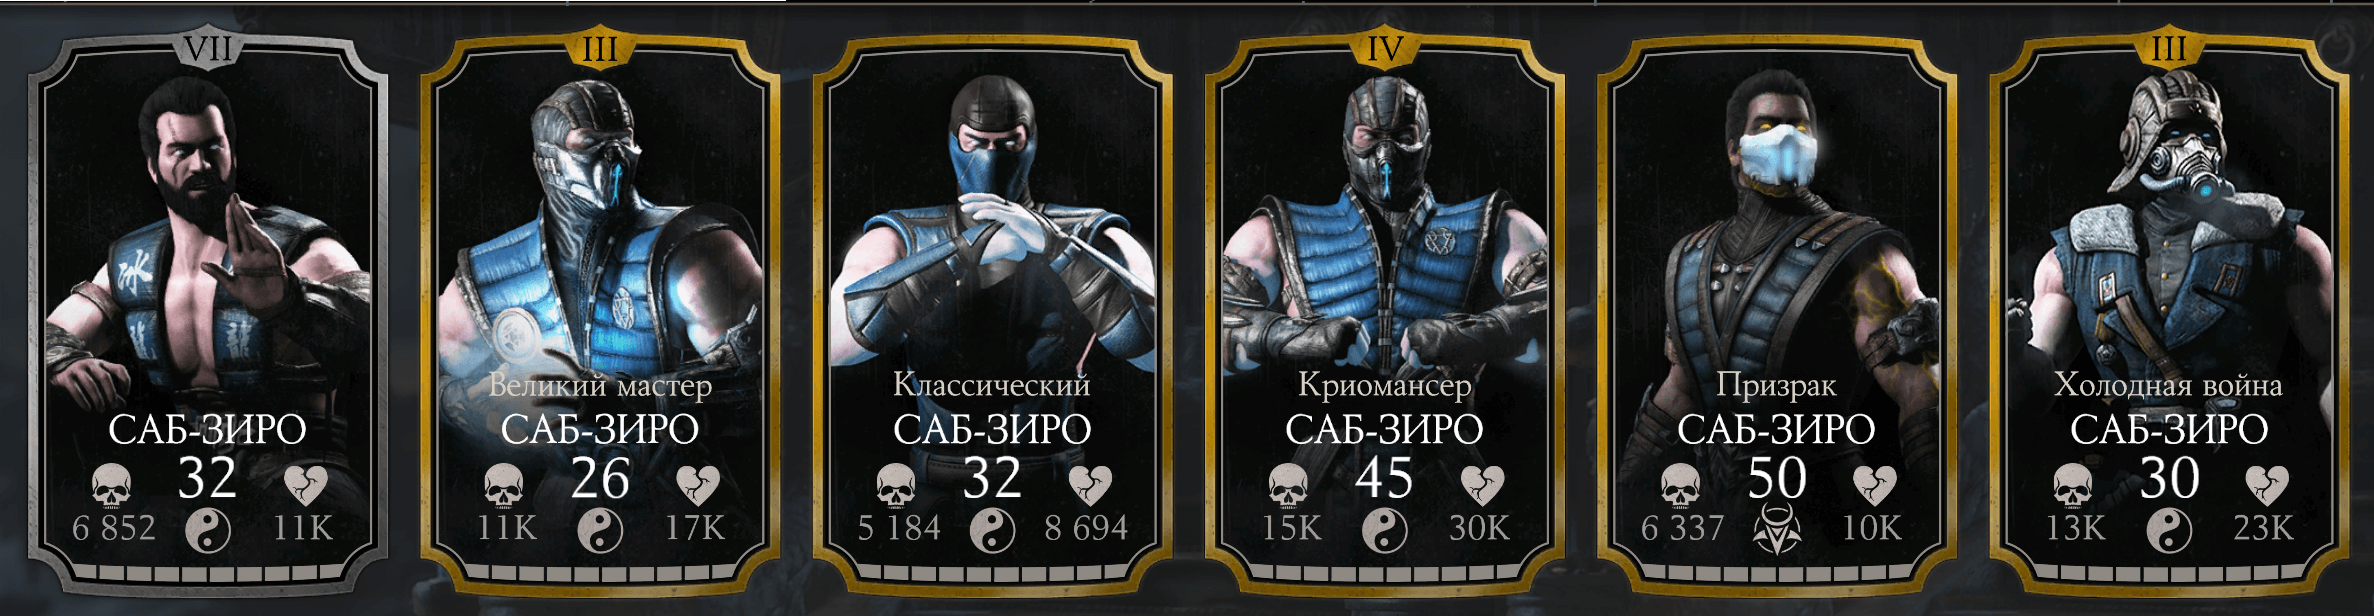 Образы Sub-Zero в Mortal Kombat X Mobile